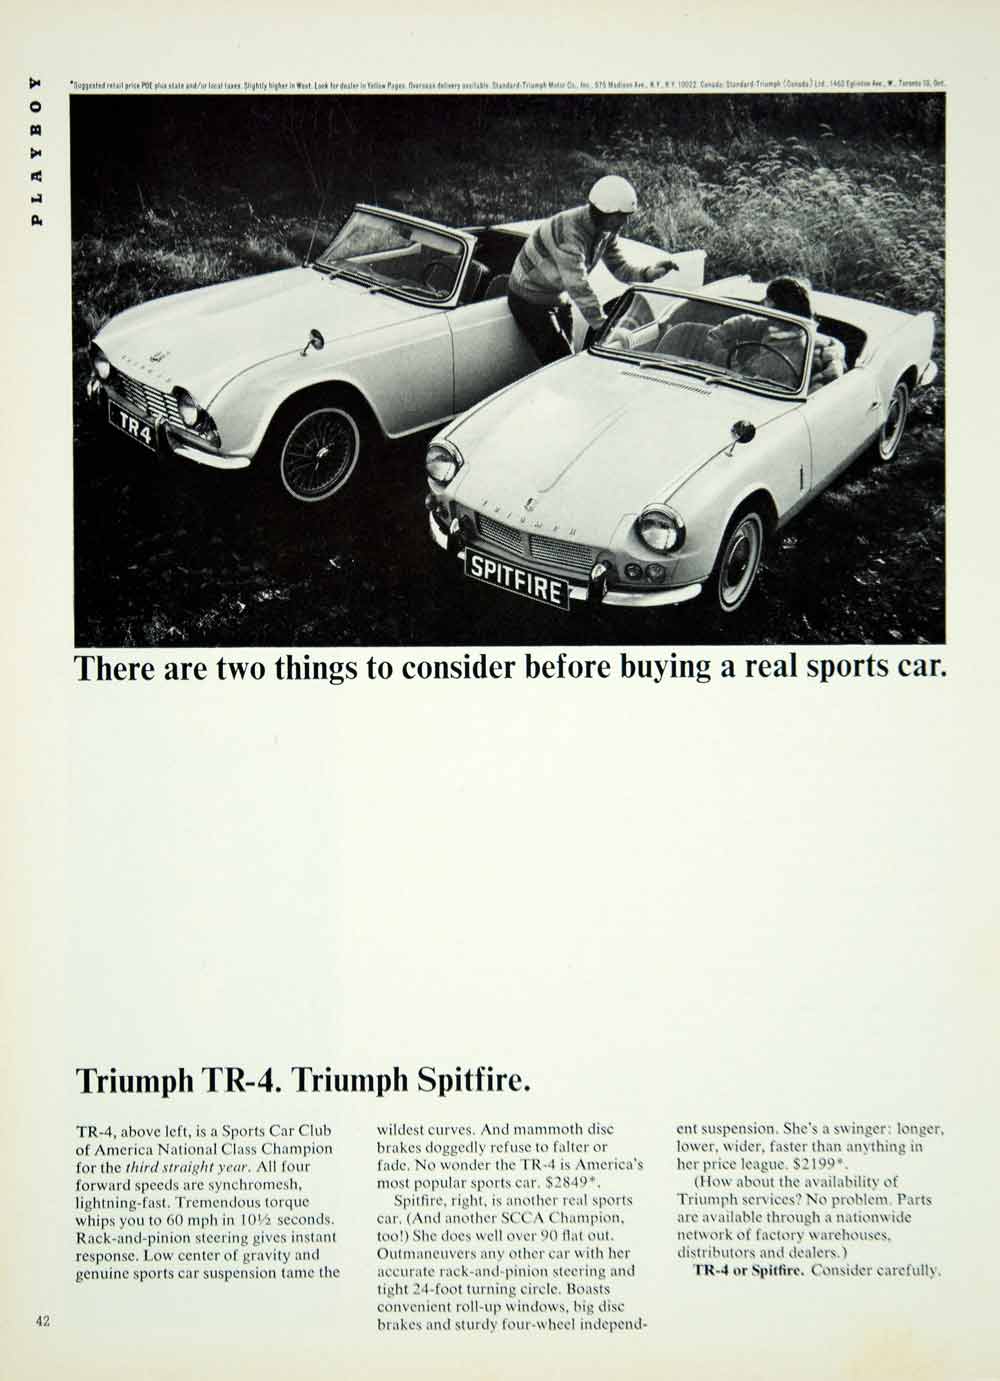 1965 Ad Vintage Triumph TR-4 Spitfire Sports Car British Automobile Auto YMMA3